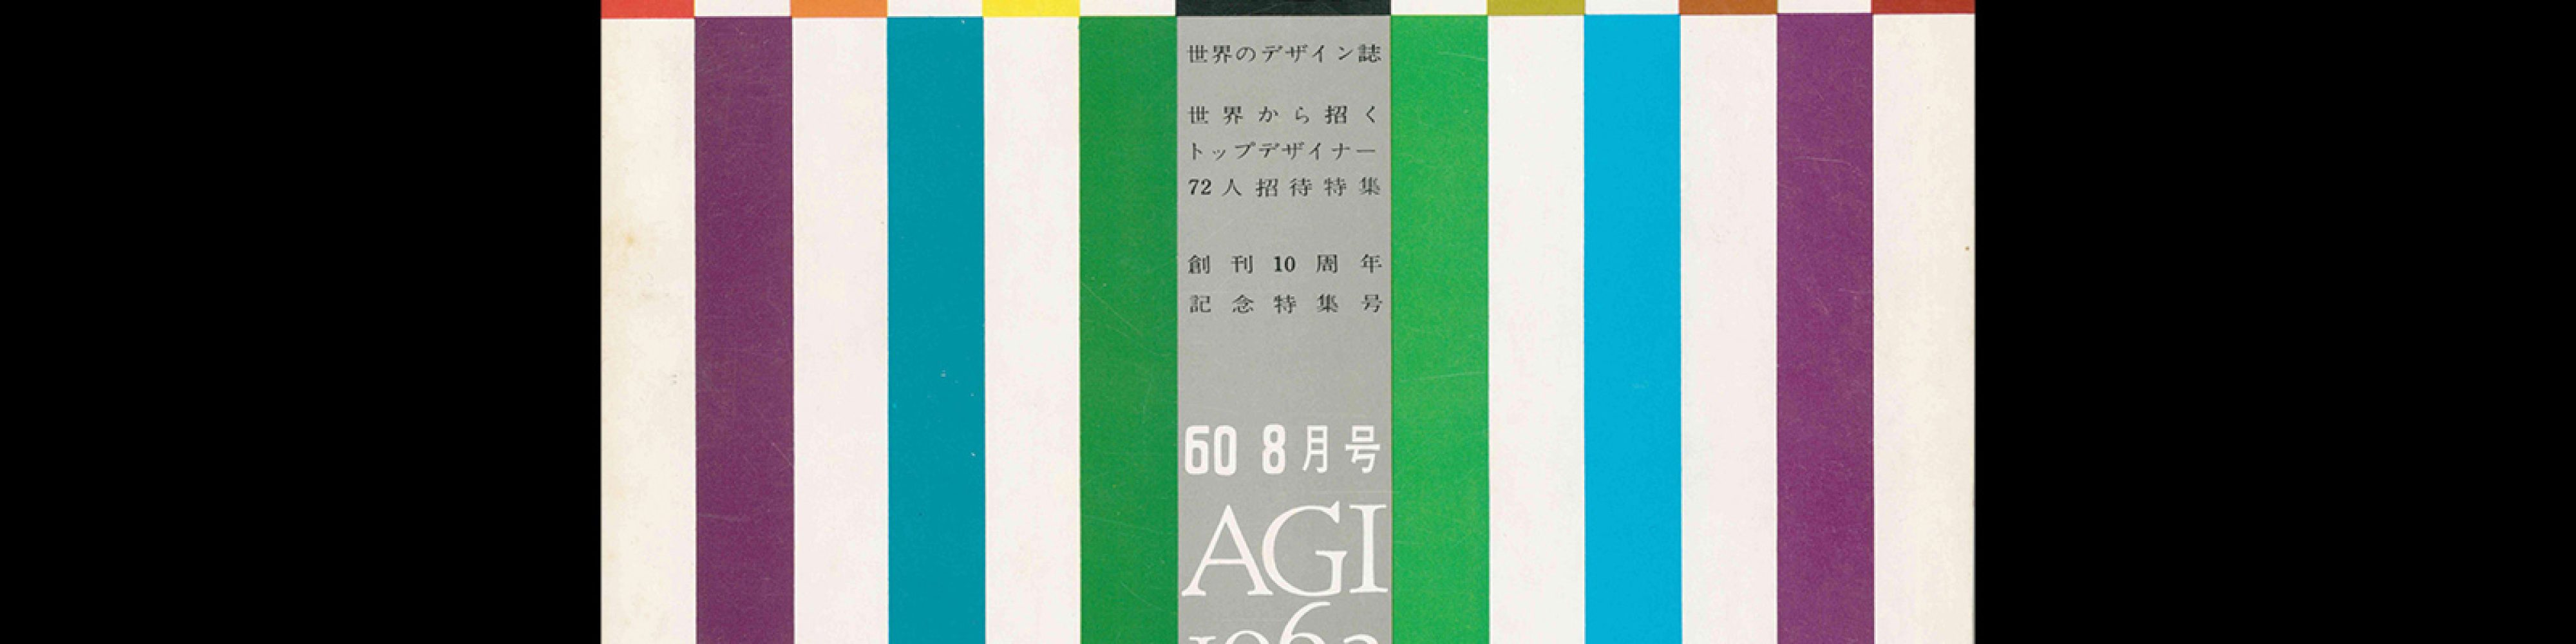 Idea 060, 1963. Cover design by Hiroshi Ohchi